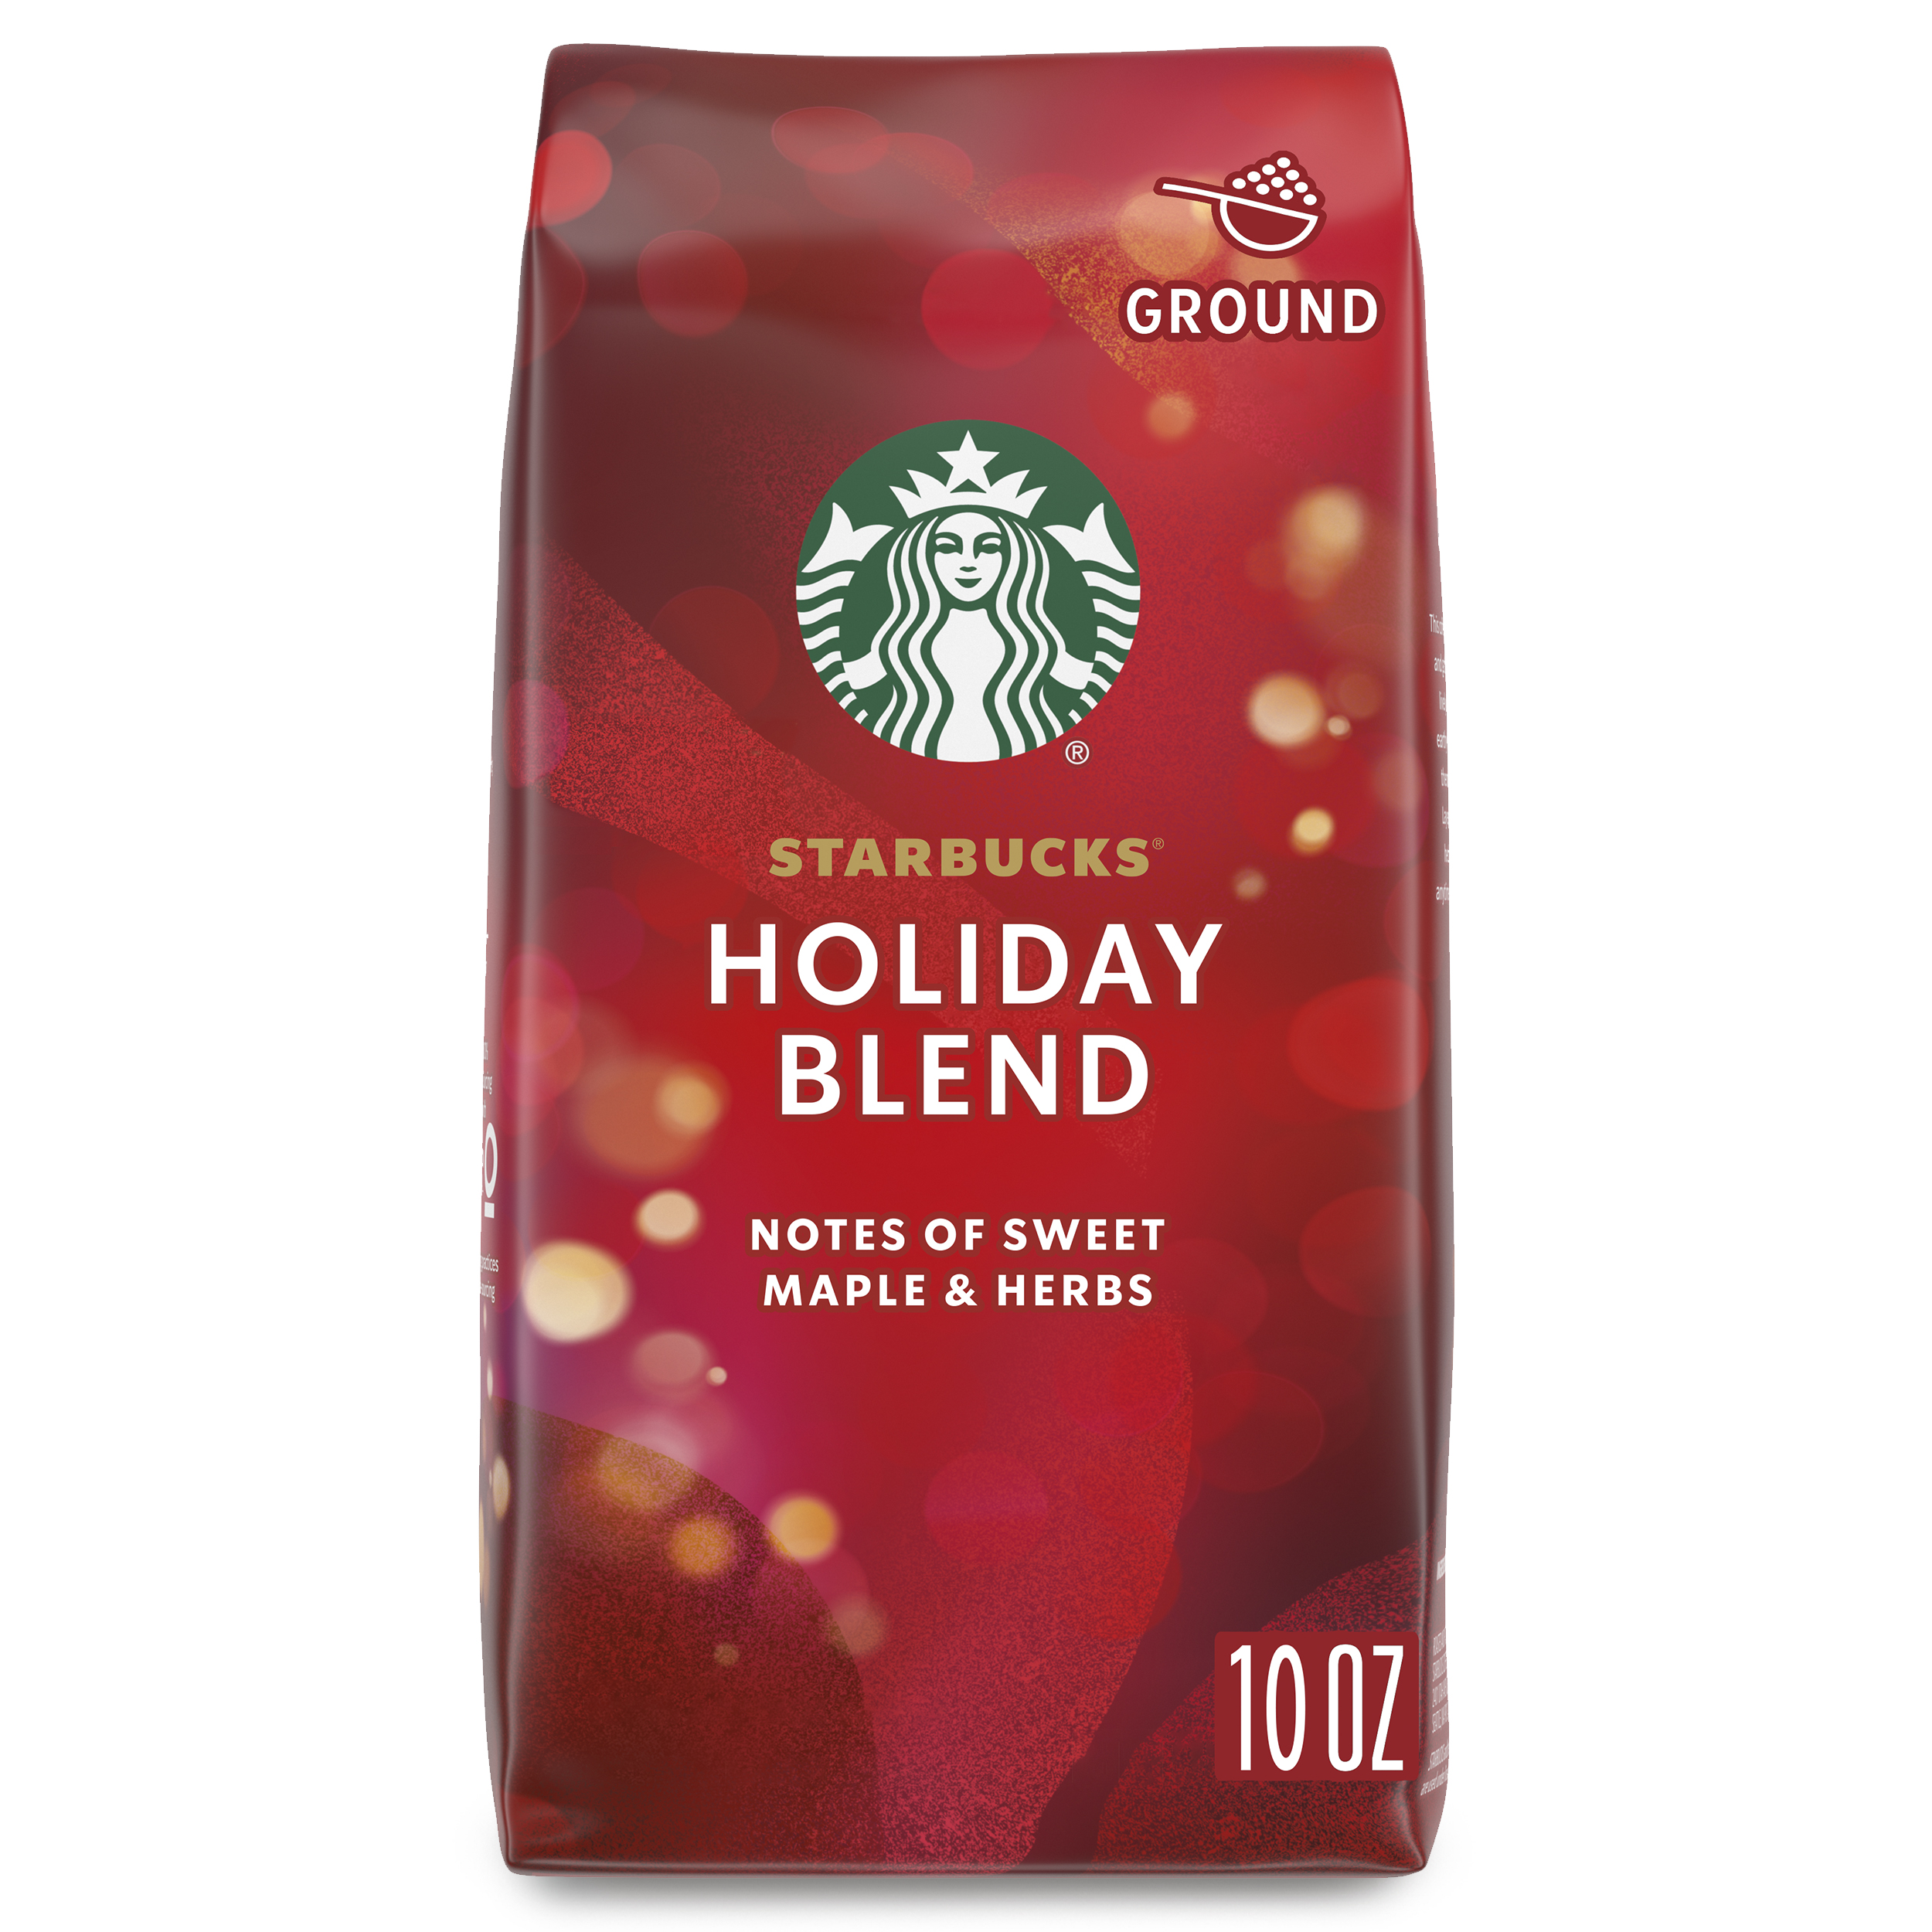 Starbucks Holiday Blend, Ground Coffee, Medium Roast, 100% Arabica, Limited Edition, 10 oz - image 1 of 7